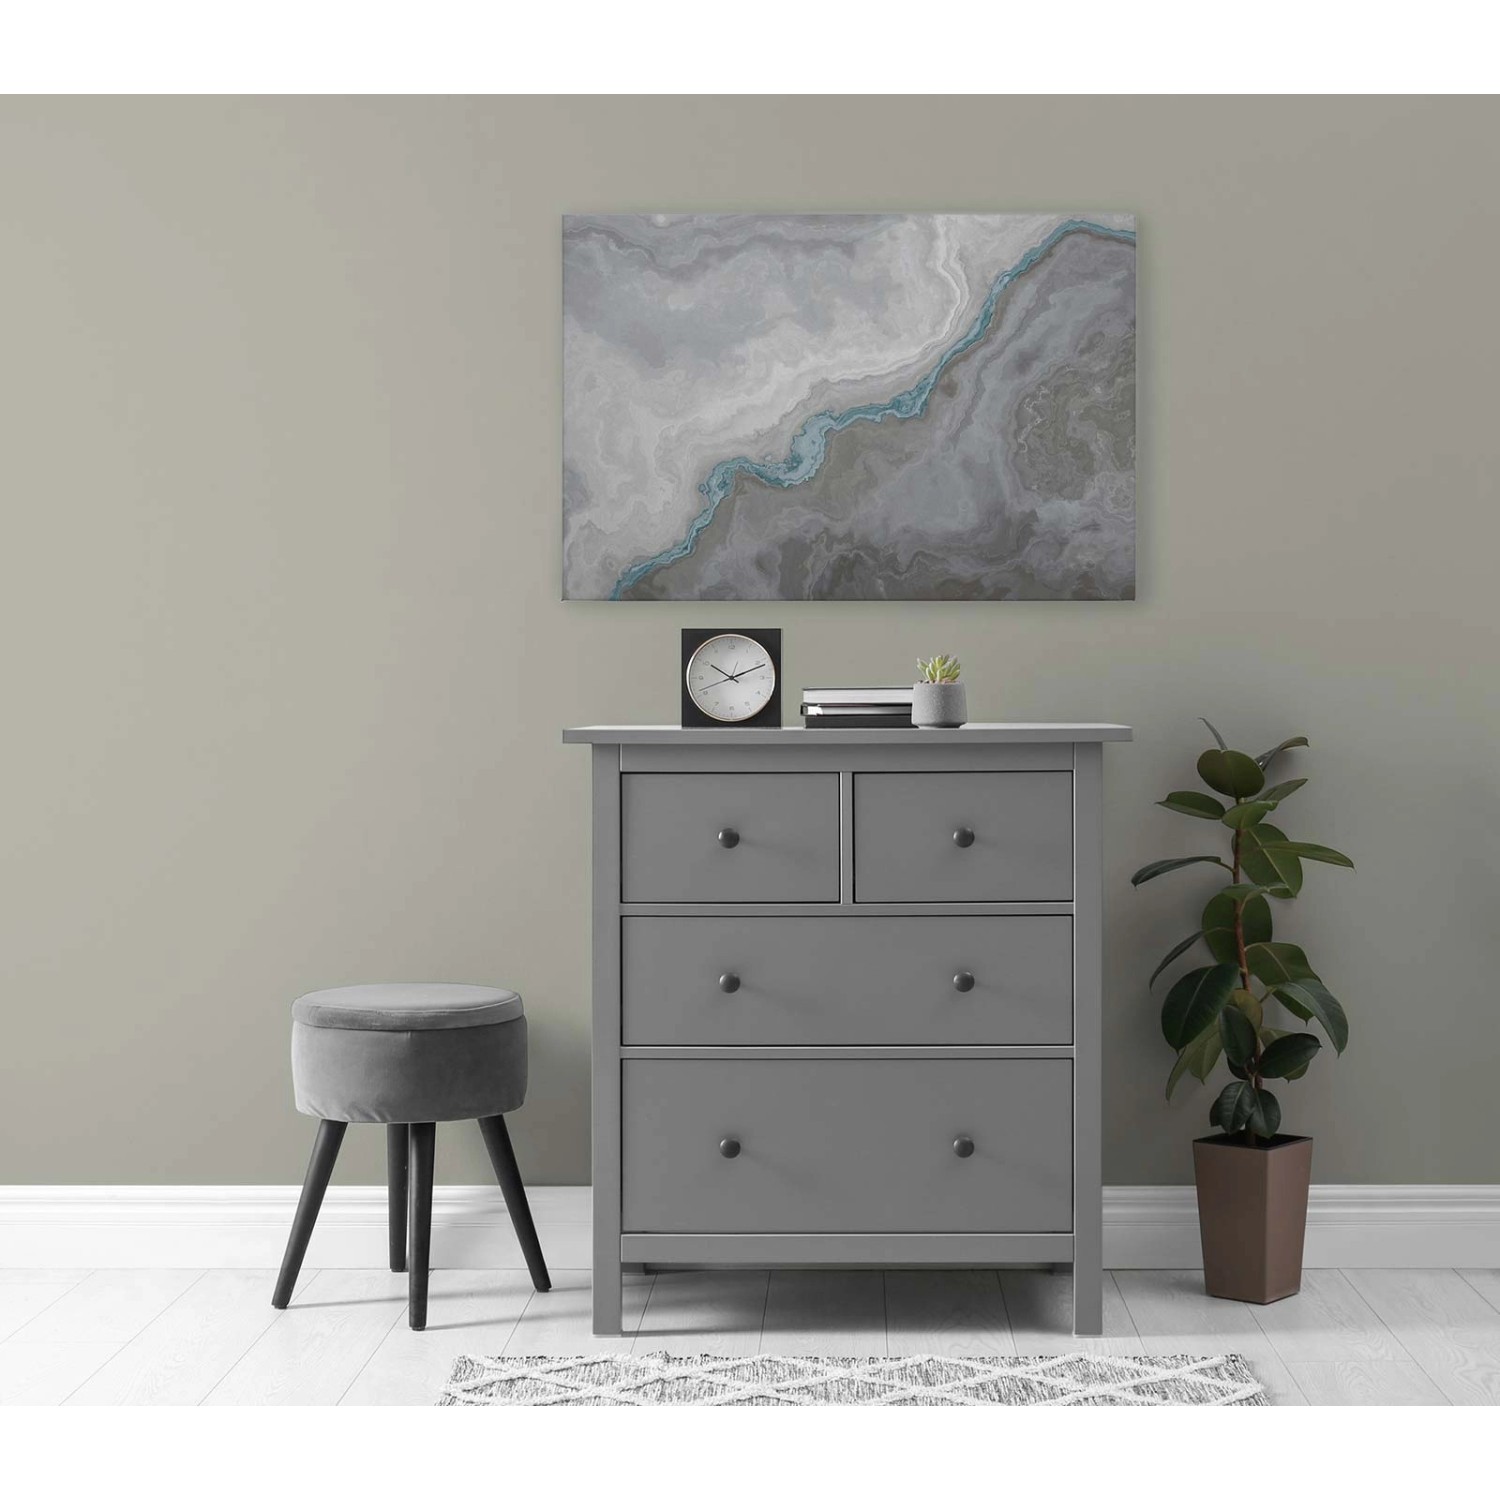 Bricoflor Wandbild Marmor Blau Grau Ideal Für Schlafzimmer Und Bad Leinwandbild In Quarz Optik In 120 X 80 Cm Elegant